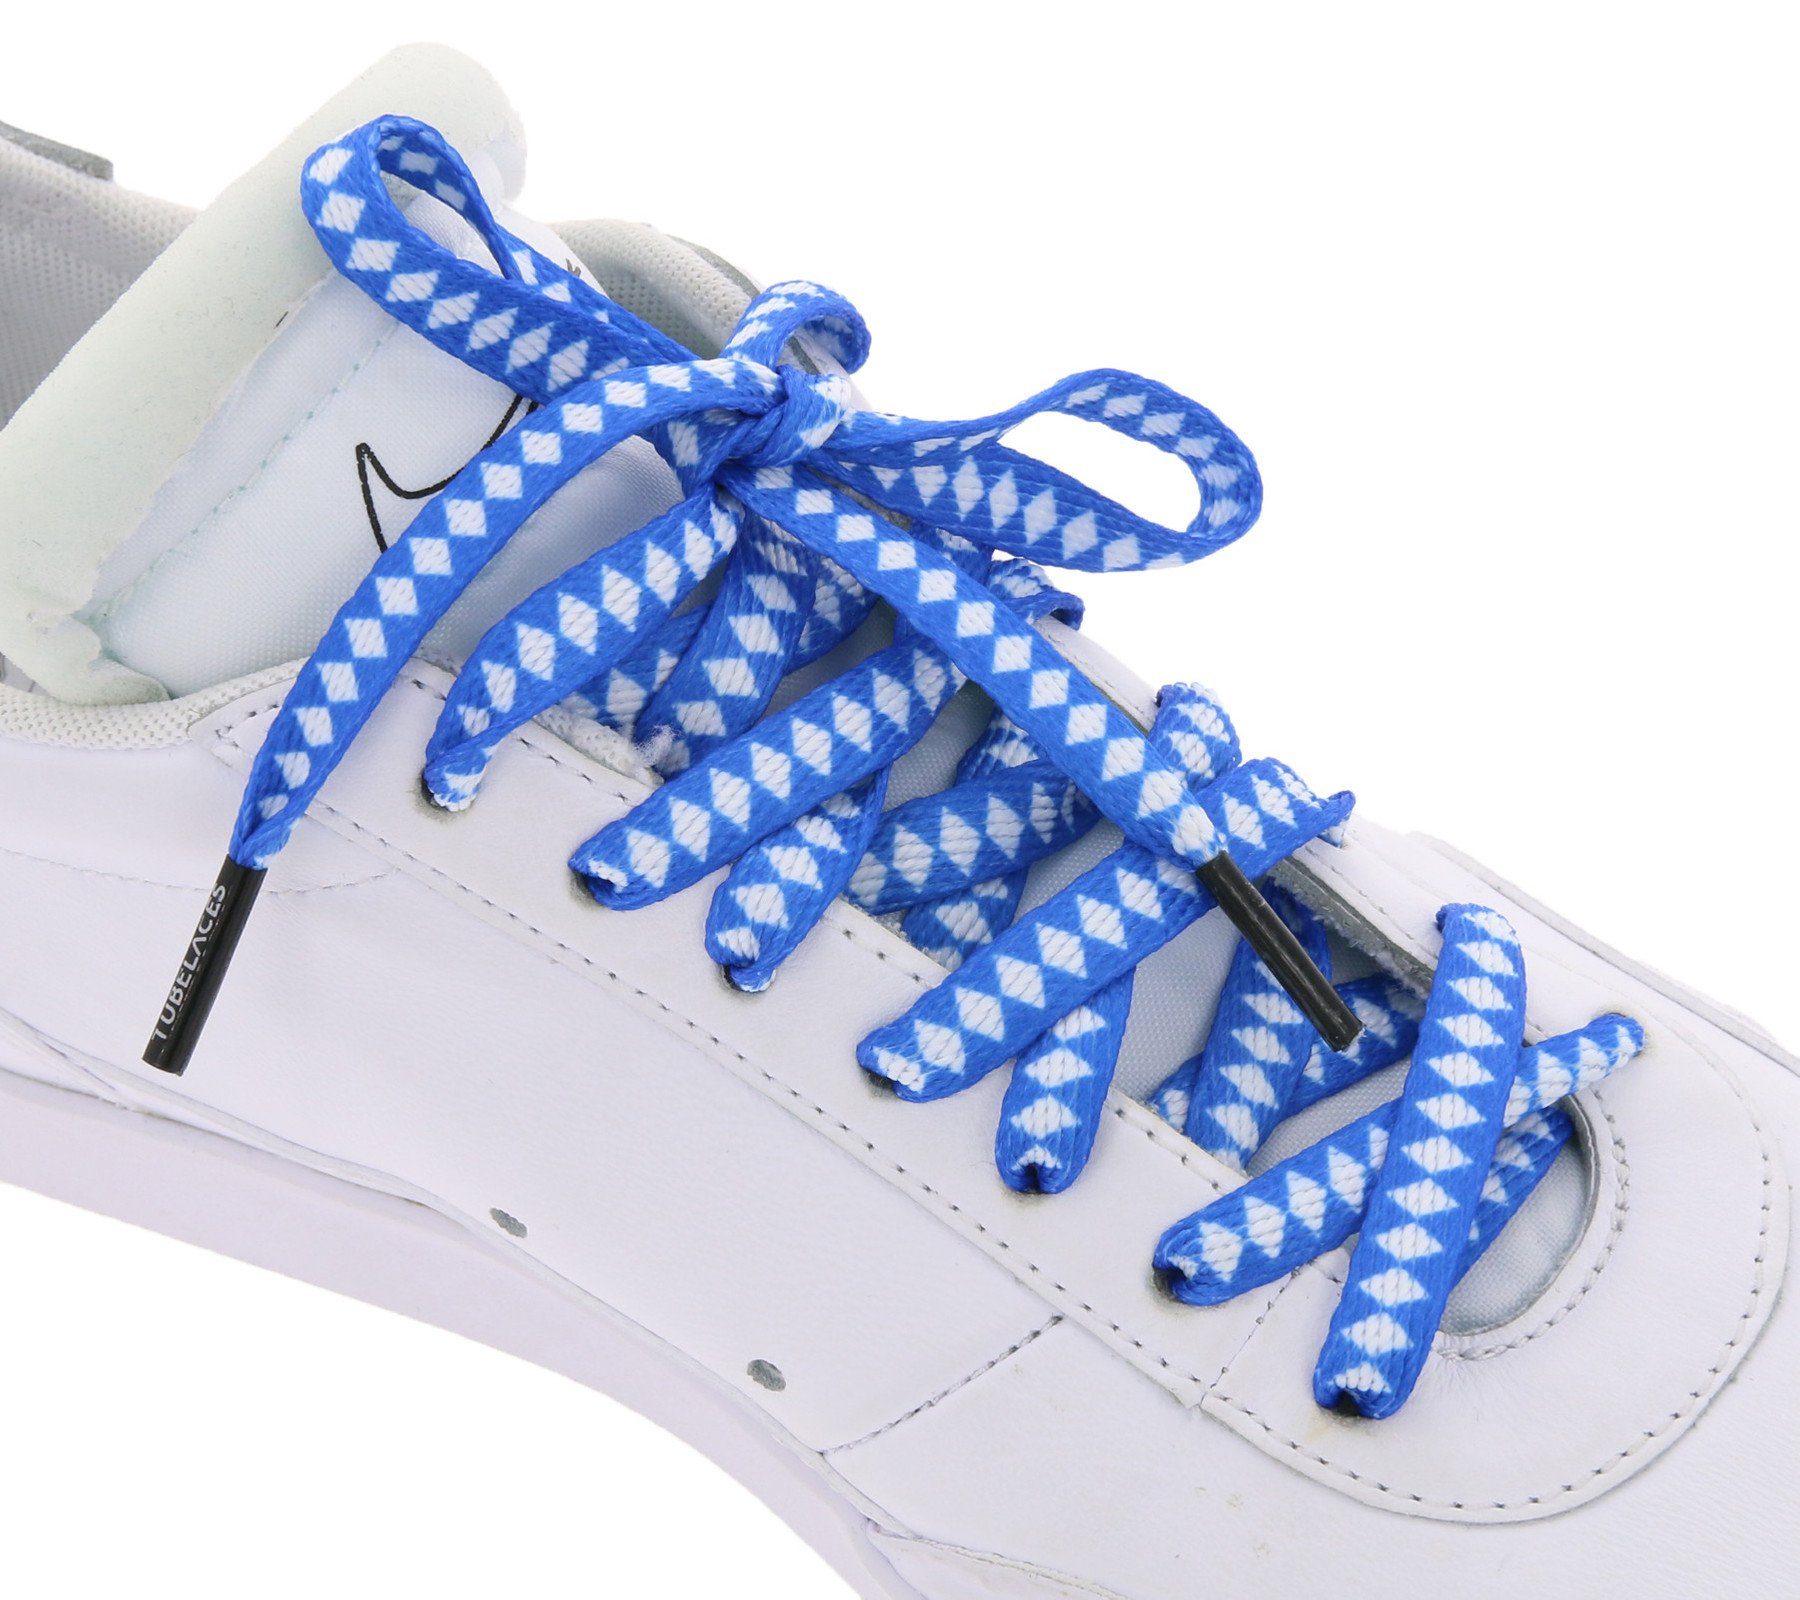 Tubelaces Schnürsenkel TubeLaces Schuhe Schuhbänder moderne Schnürsenkel Schnürbänder Bayern Blau/Weiß | Schnürsenkel